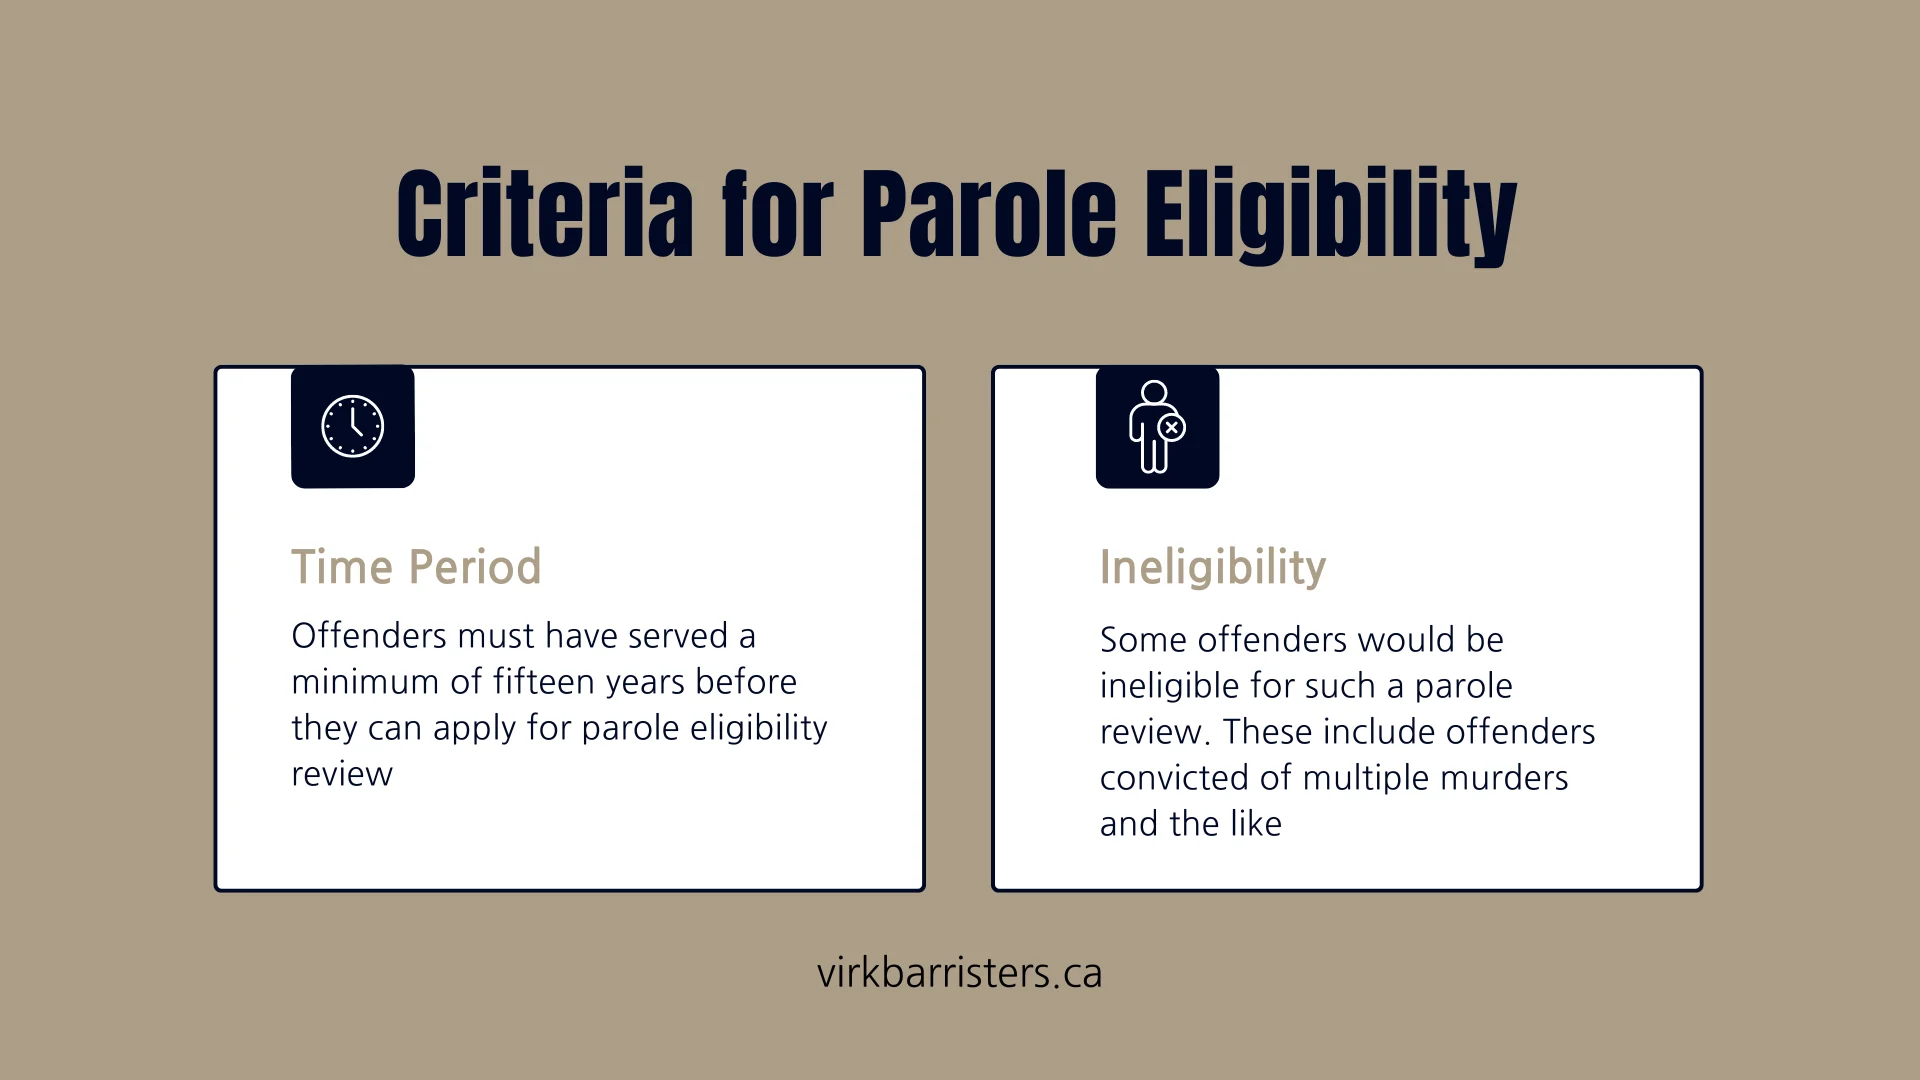 A chart explaining the criteria for parole eligibility